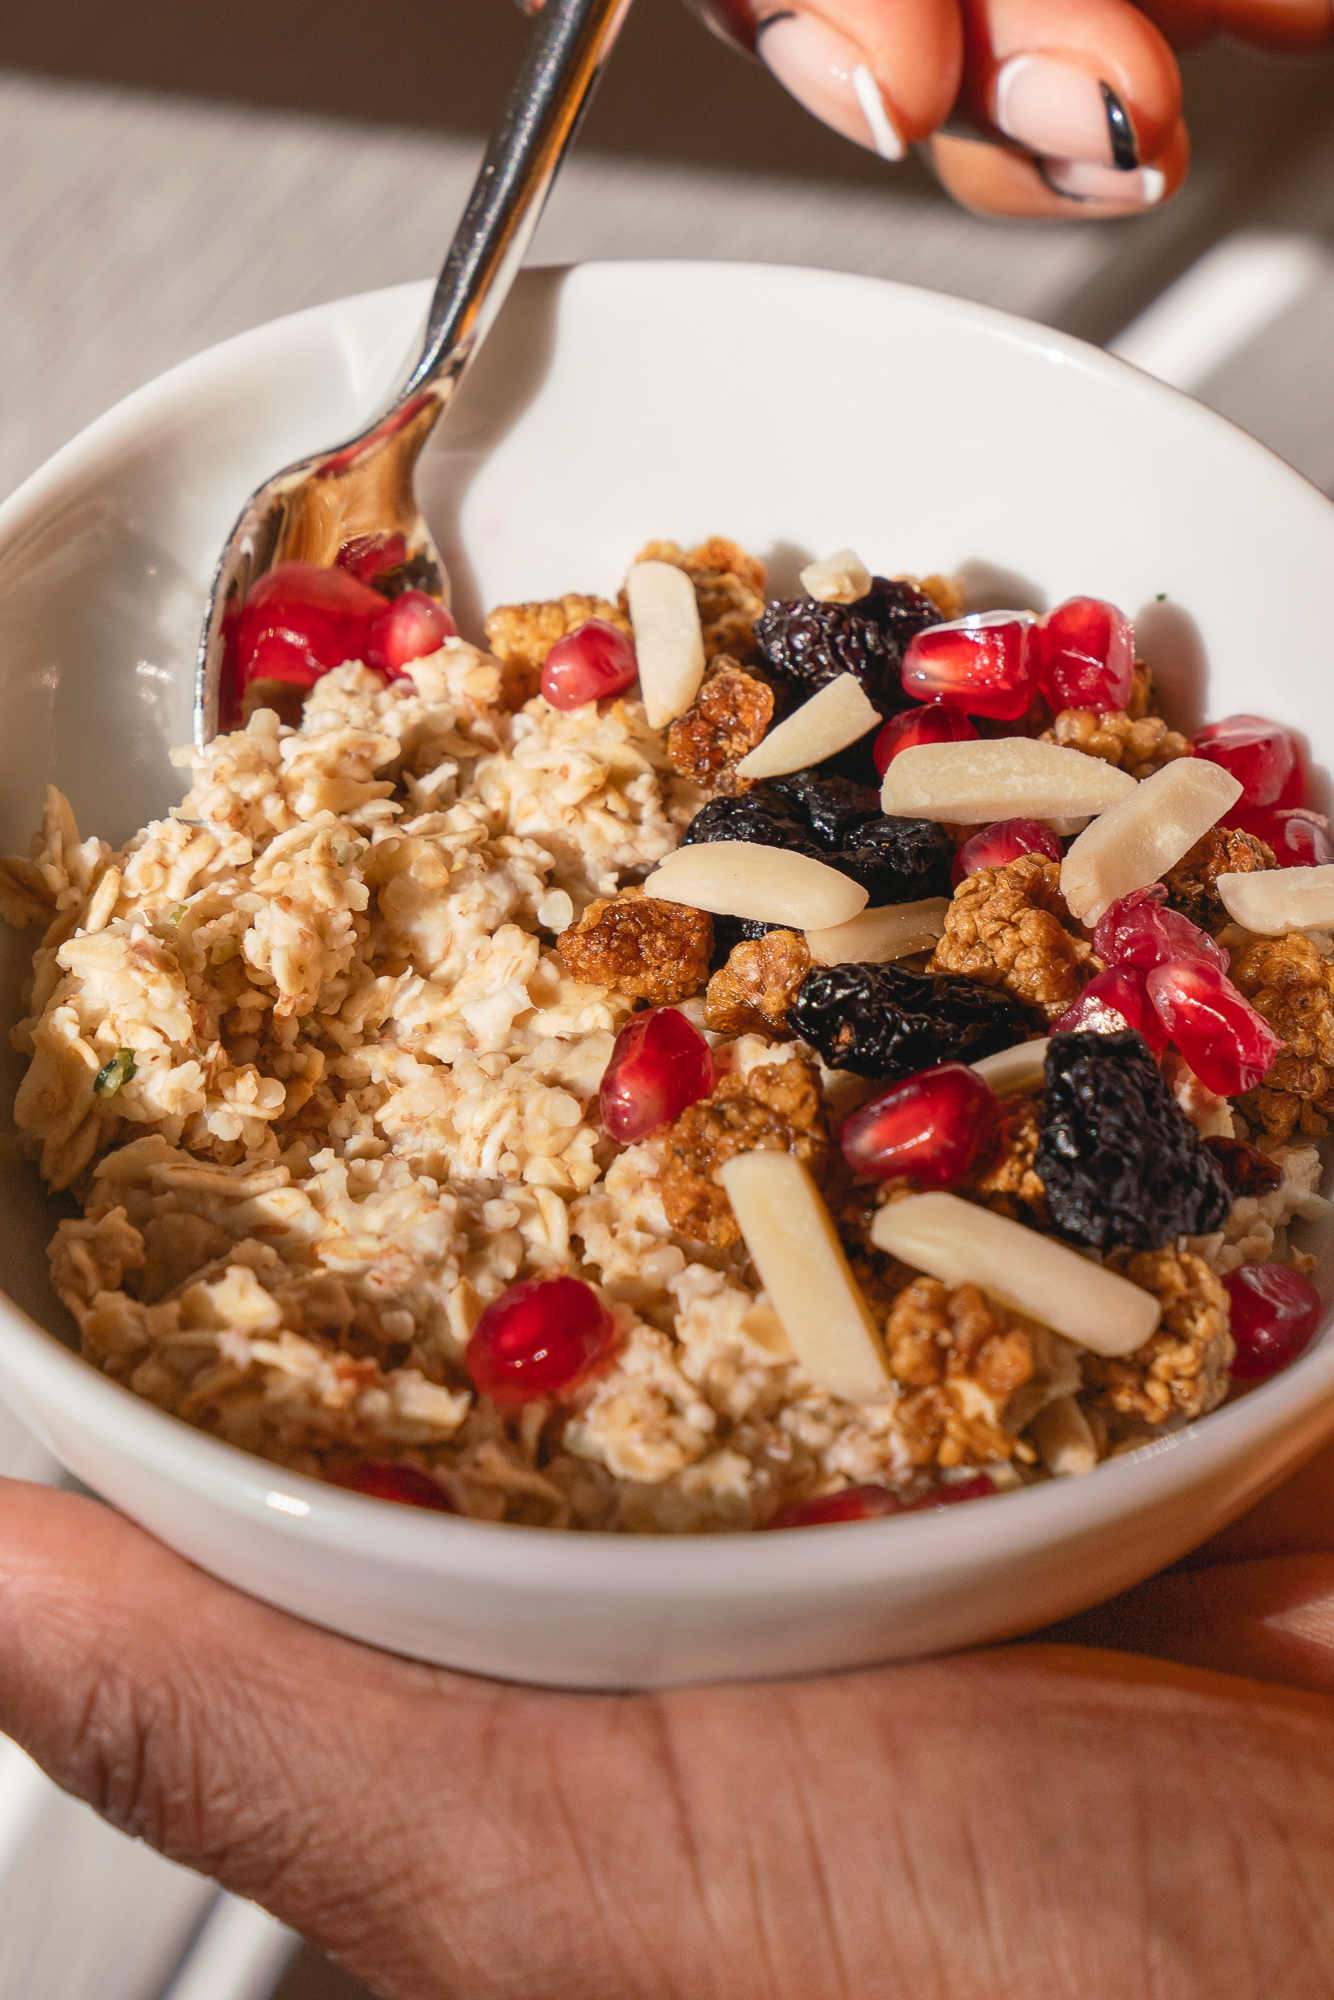 Breakfast porridge - Maya Feller Nutrition